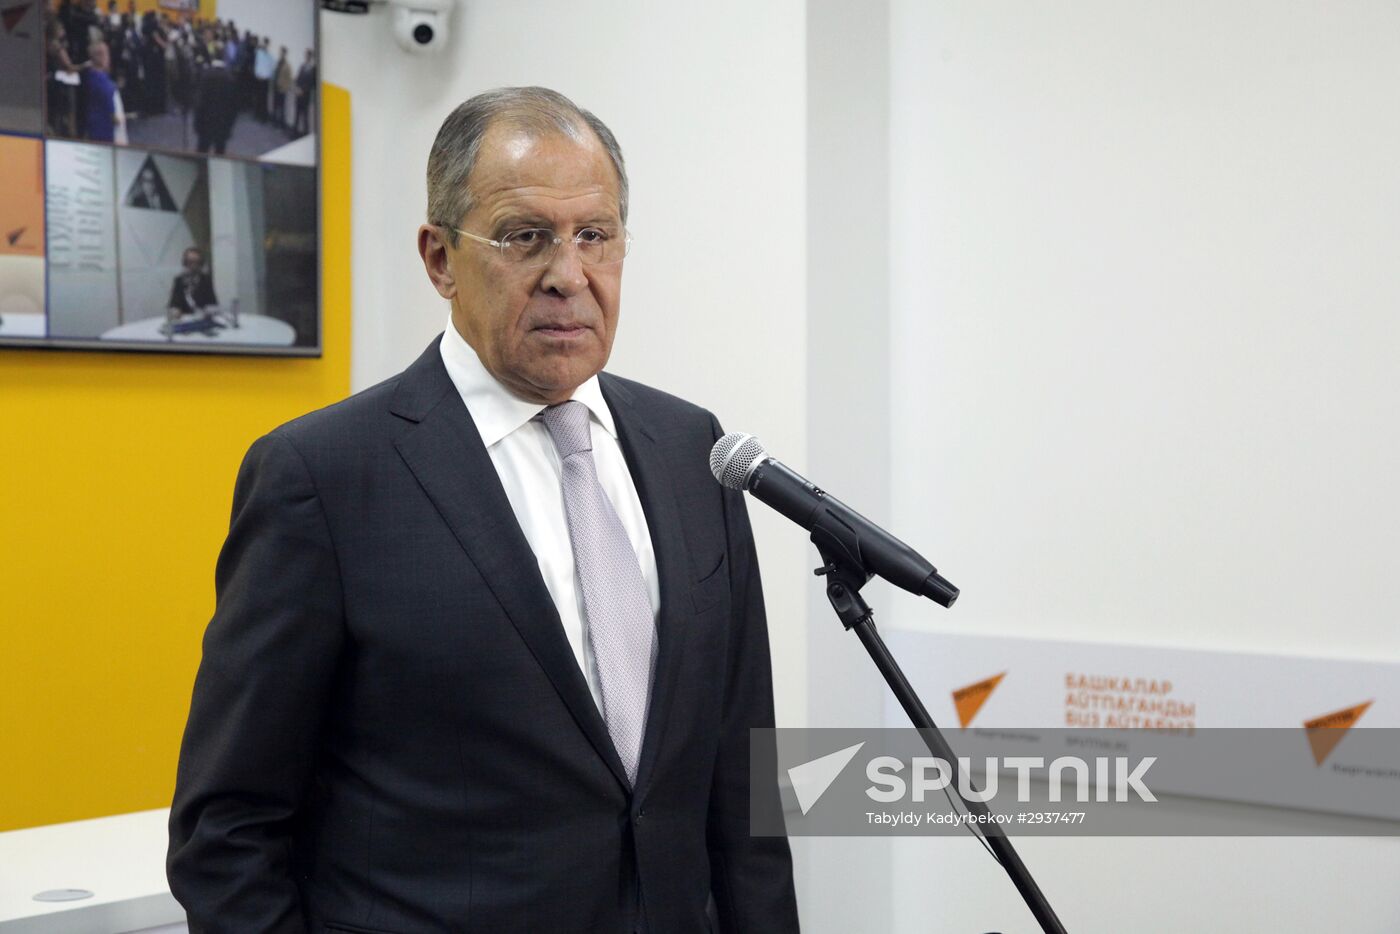 Foreign Minister Sergei Lavrov attends opening ceremony of Sputnik editorial center in Bishkek